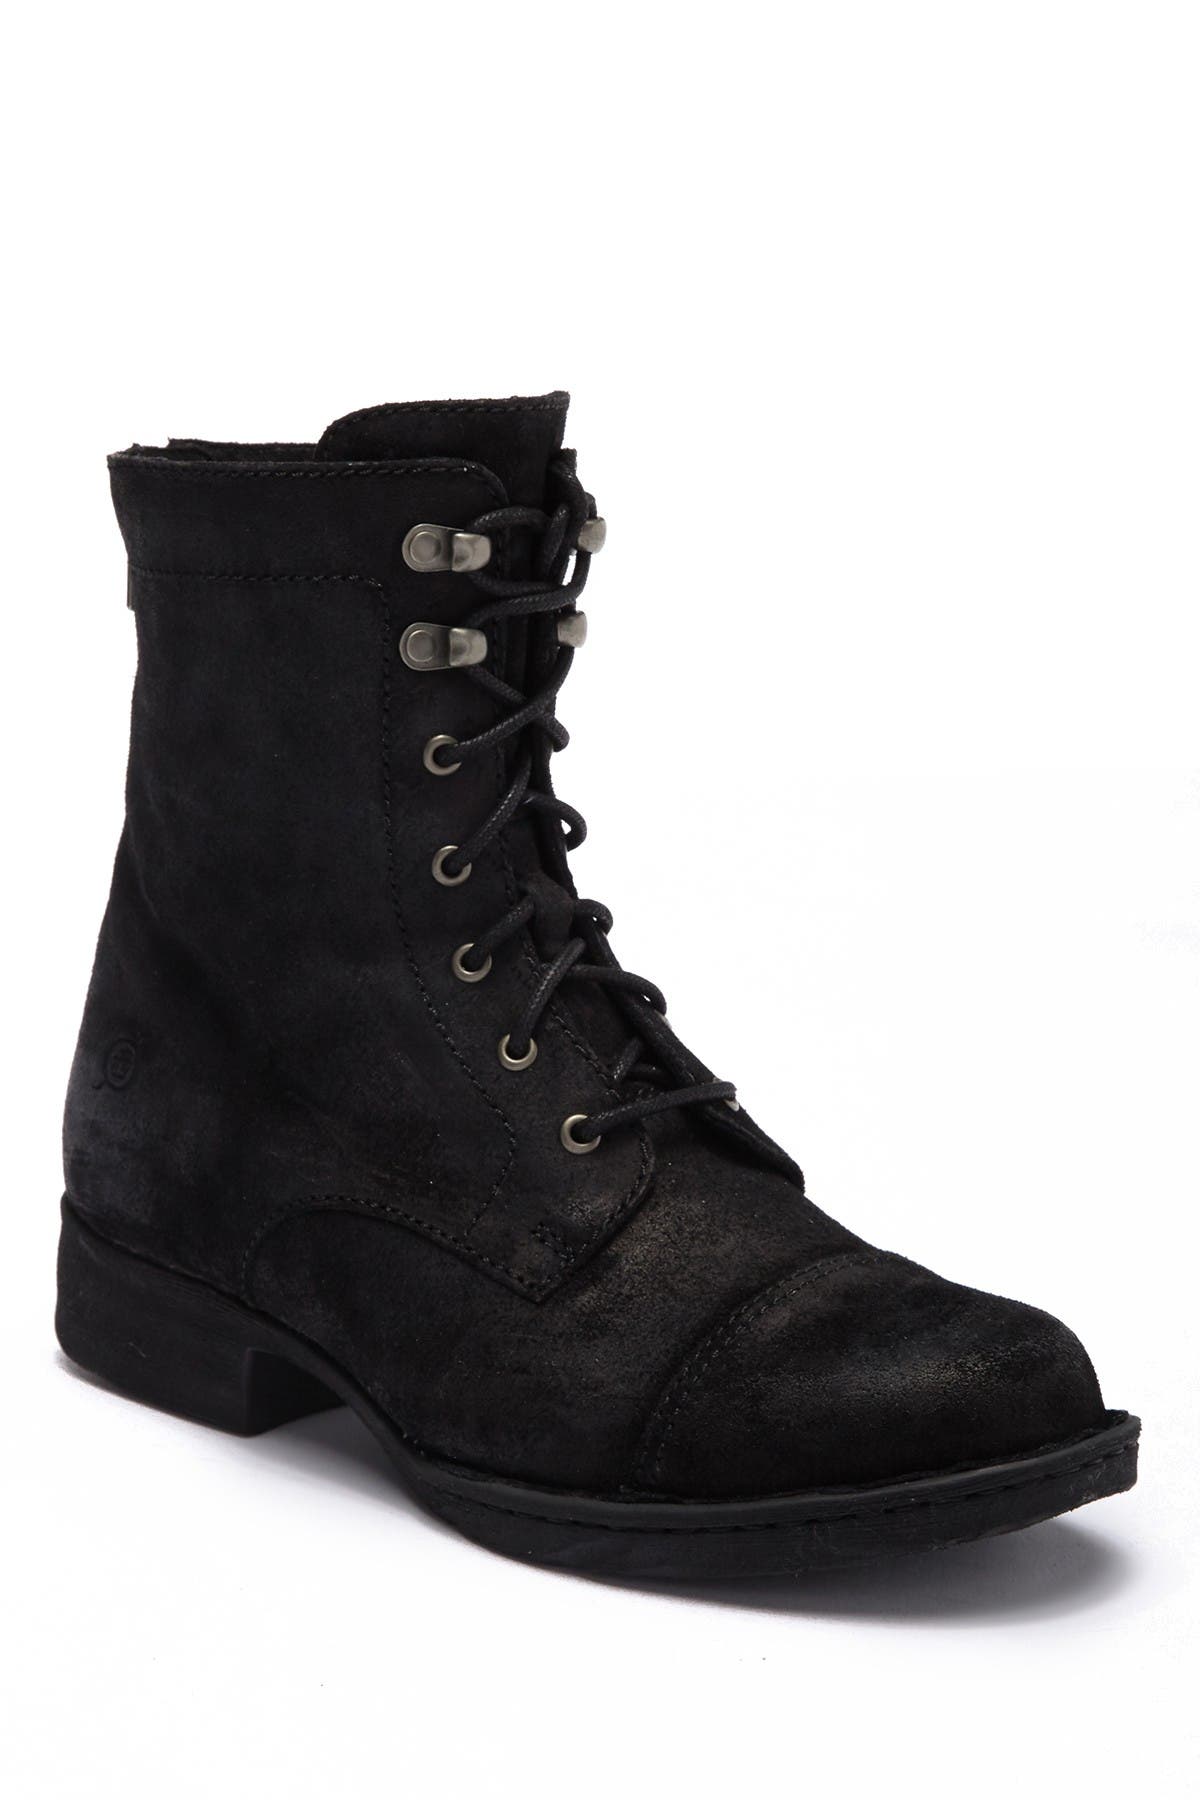 born black lace up boots